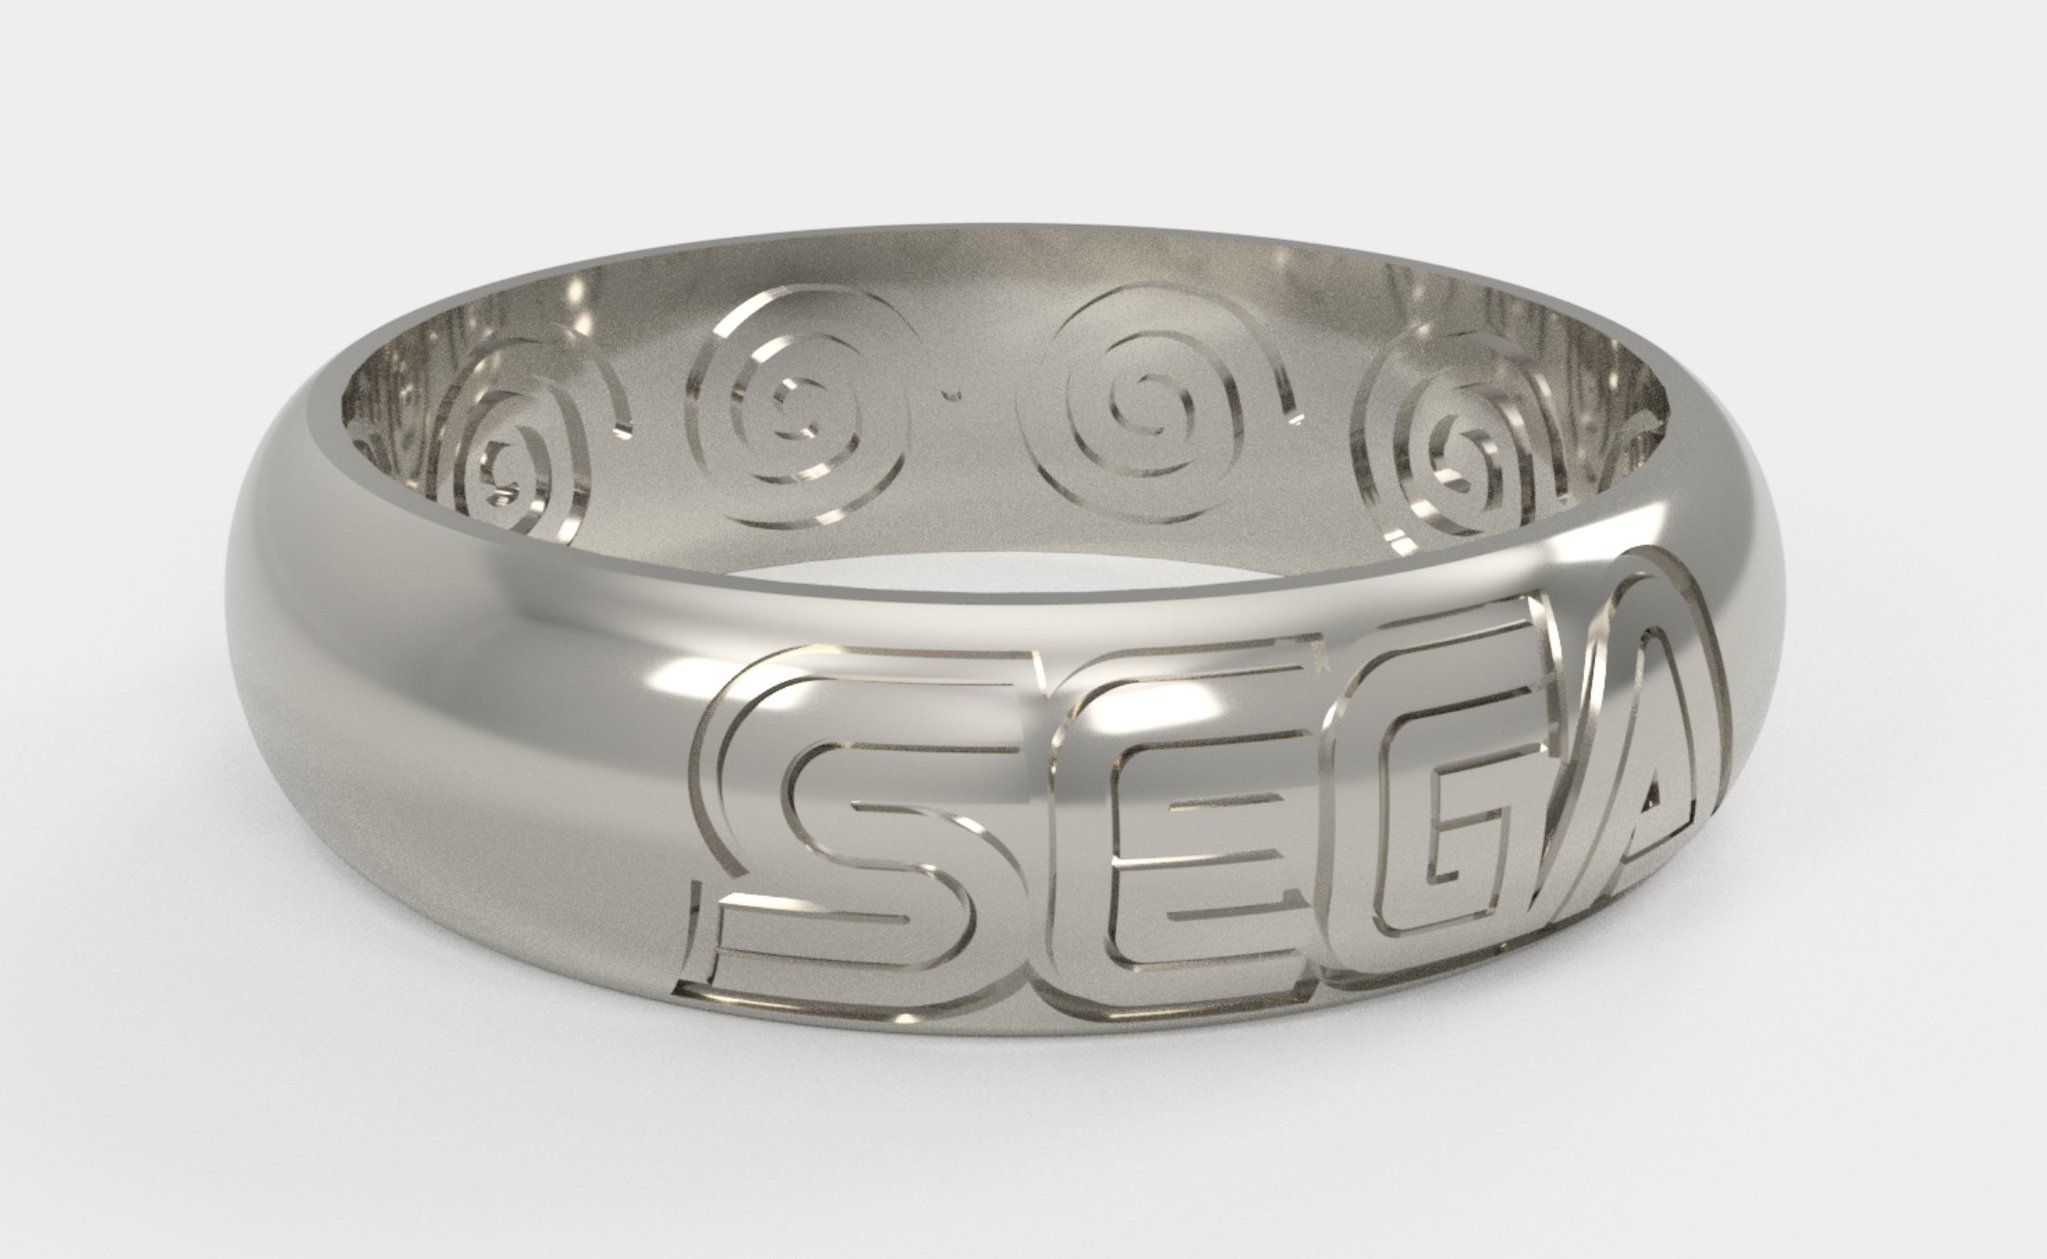 Sega ring (Dreamcast)